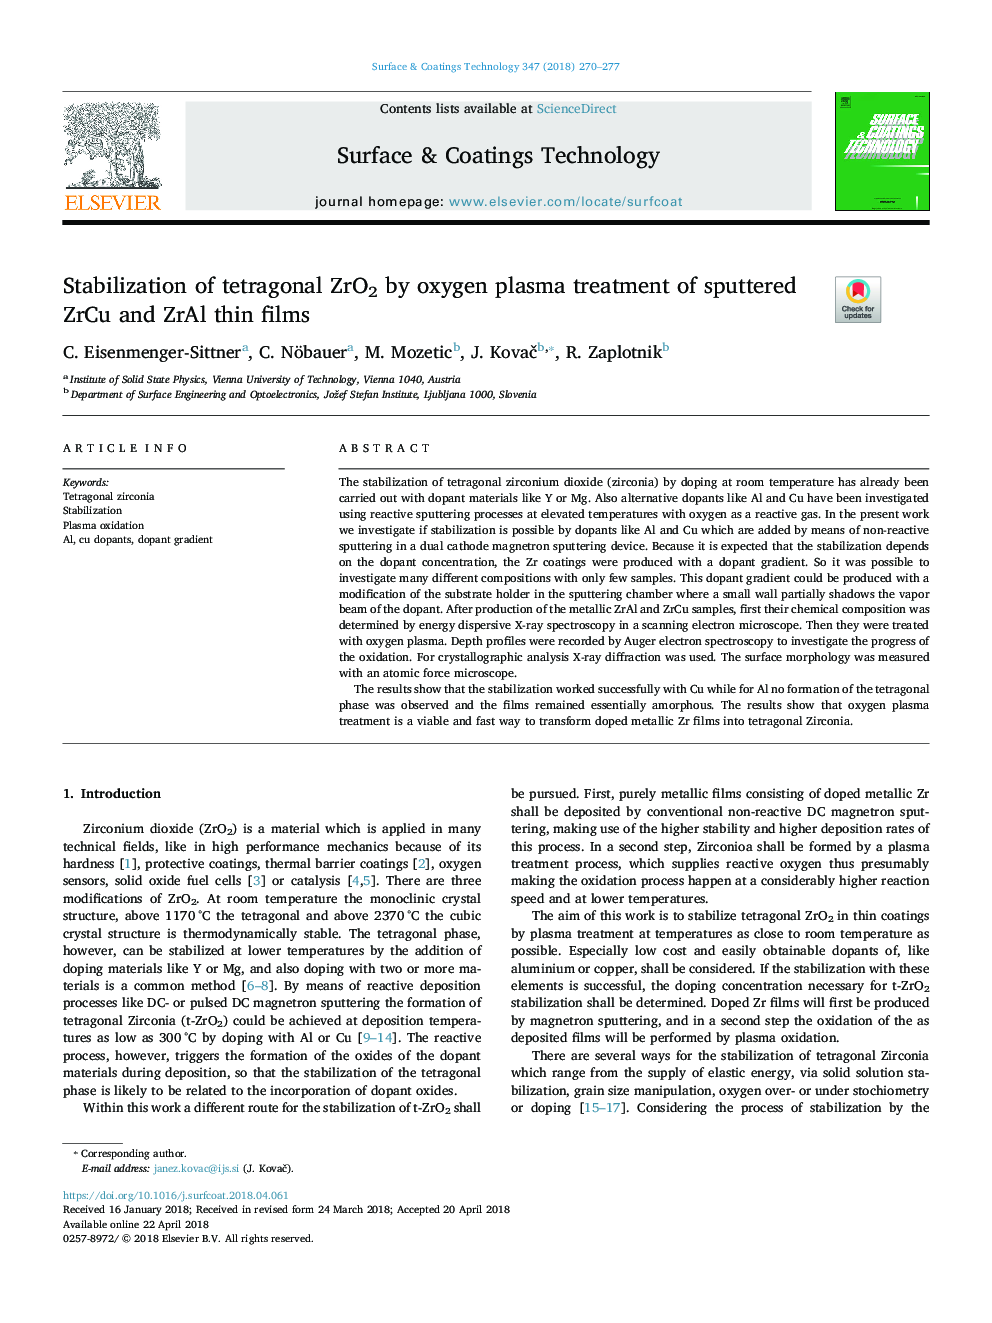 Stabilization of tetragonal ZrO2 by oxygen plasma treatment of sputtered ZrCu and ZrAl thin films